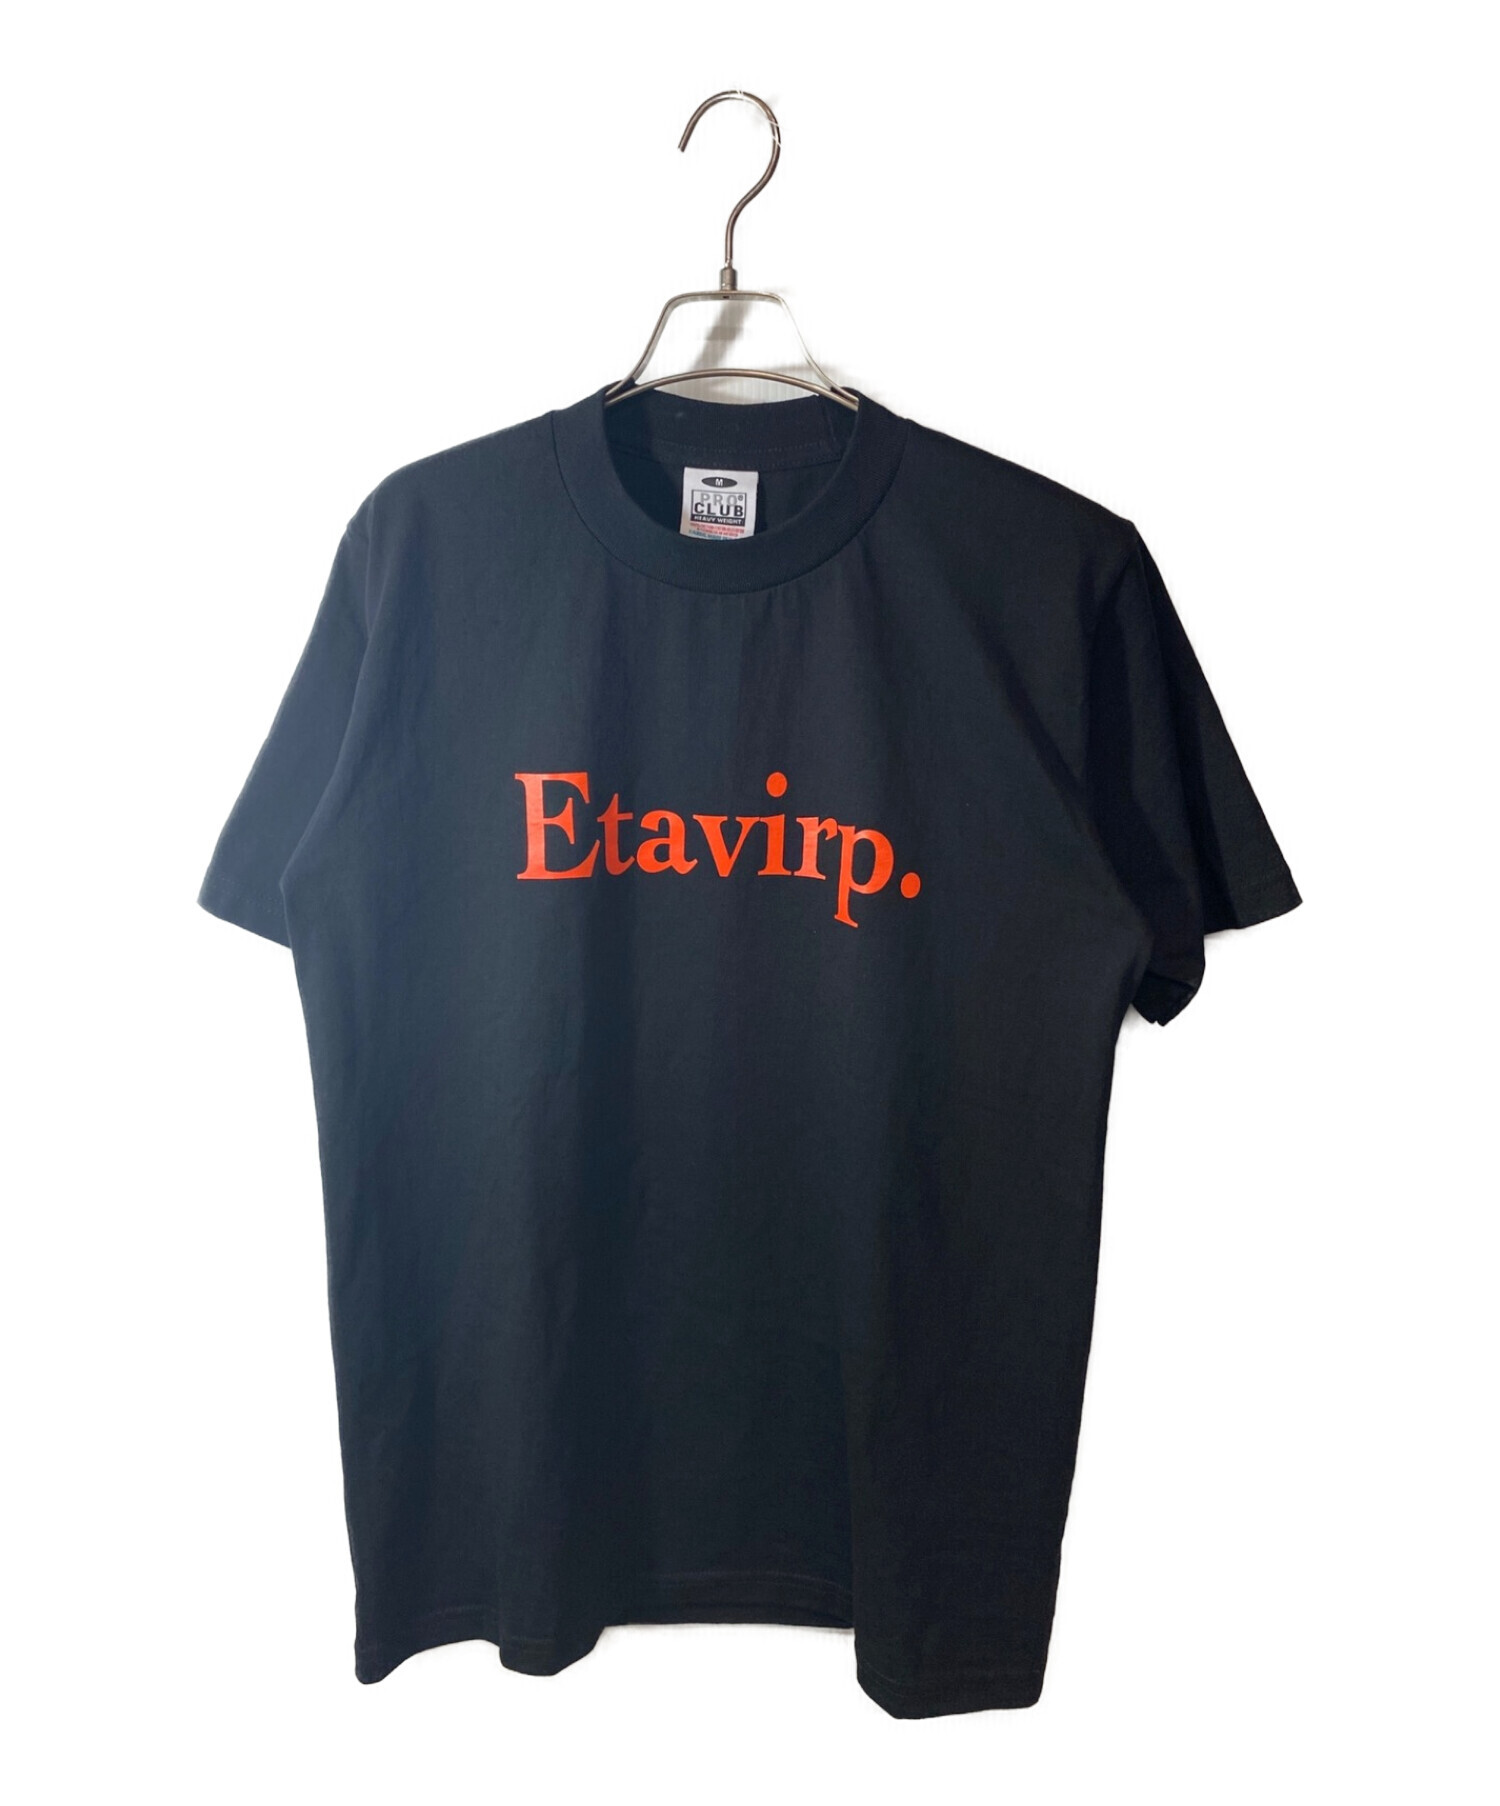 etavirp. (エタヴァープ) Etavirp Logo T-Shirt ブラック サイズ:M